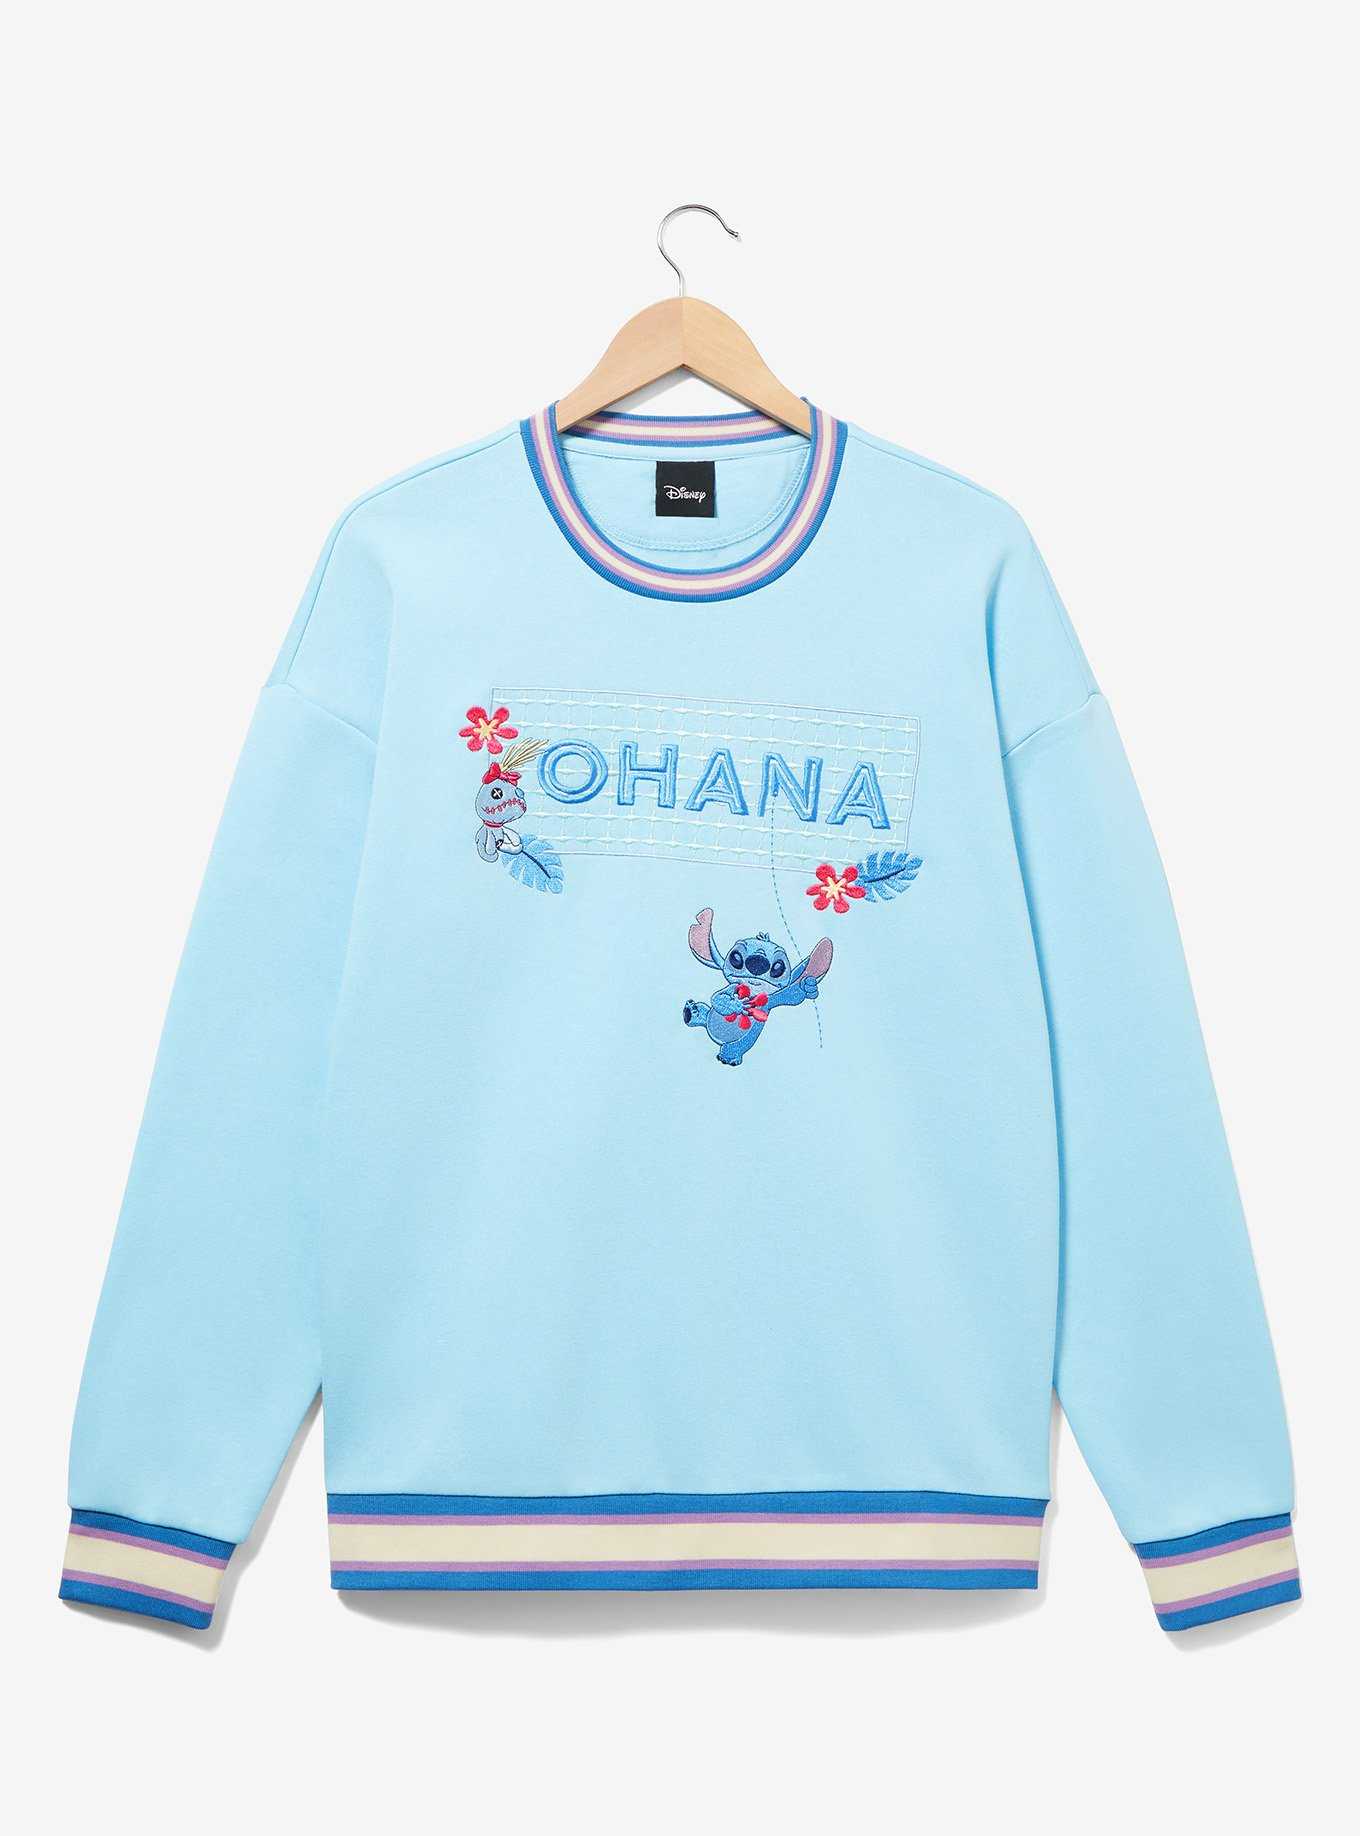 Boxlunch Disney Lilo & Stitch Gifts Youth Girls T-Shirt